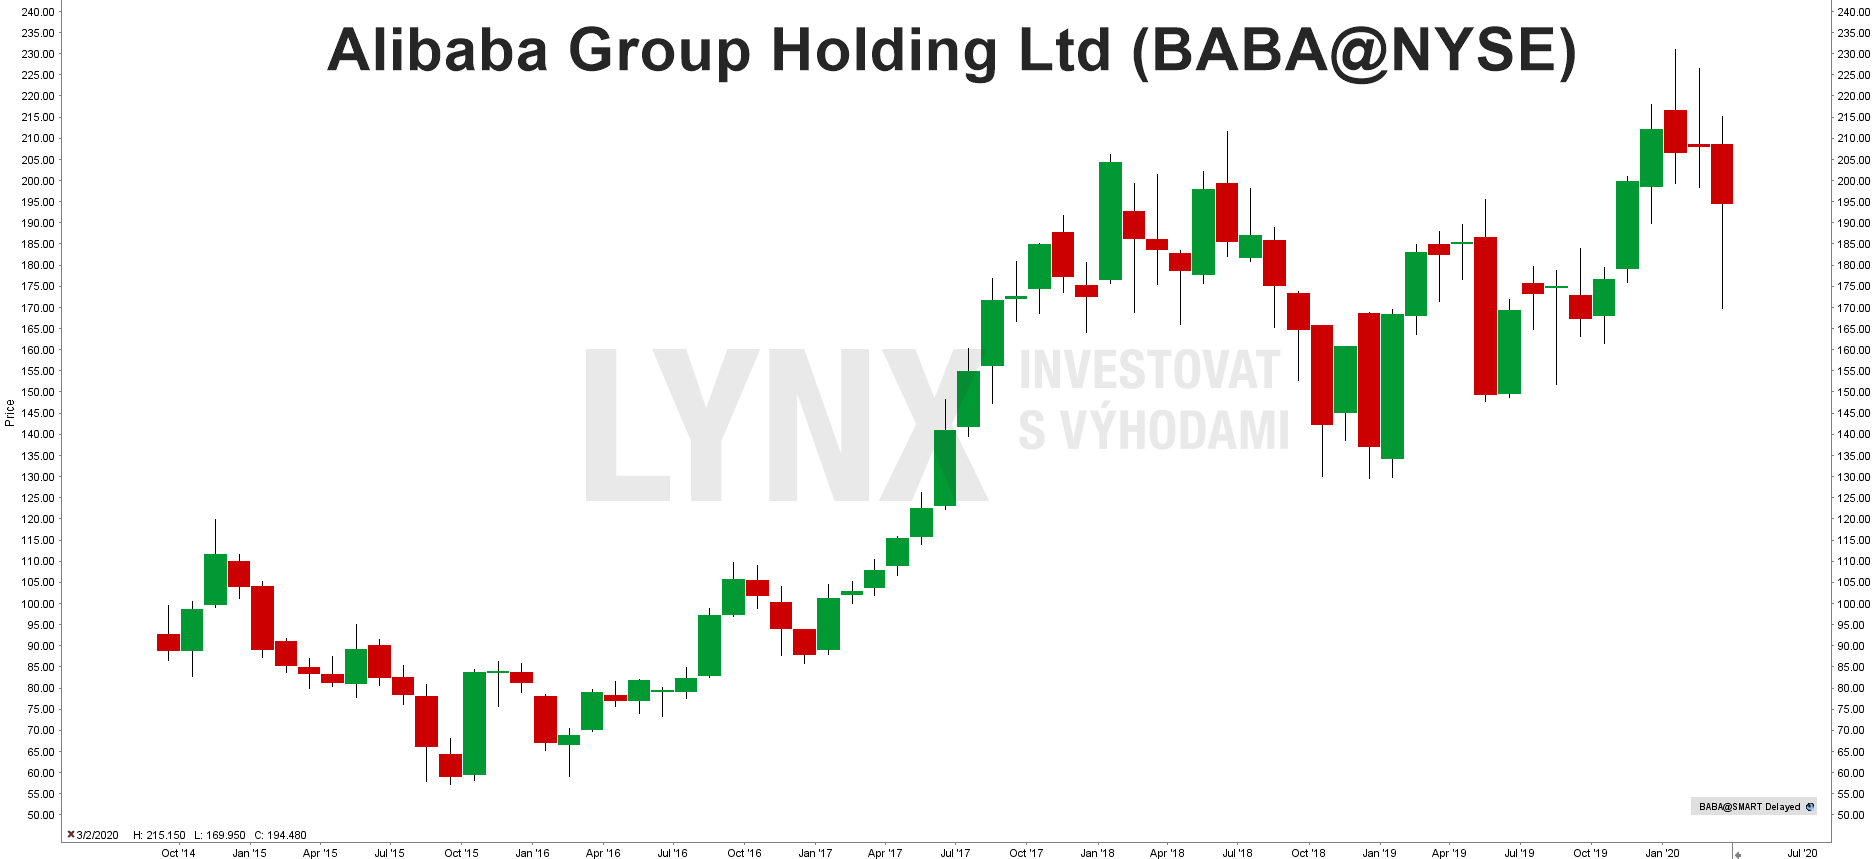 Graf akcie Alibaba Group (BABA)